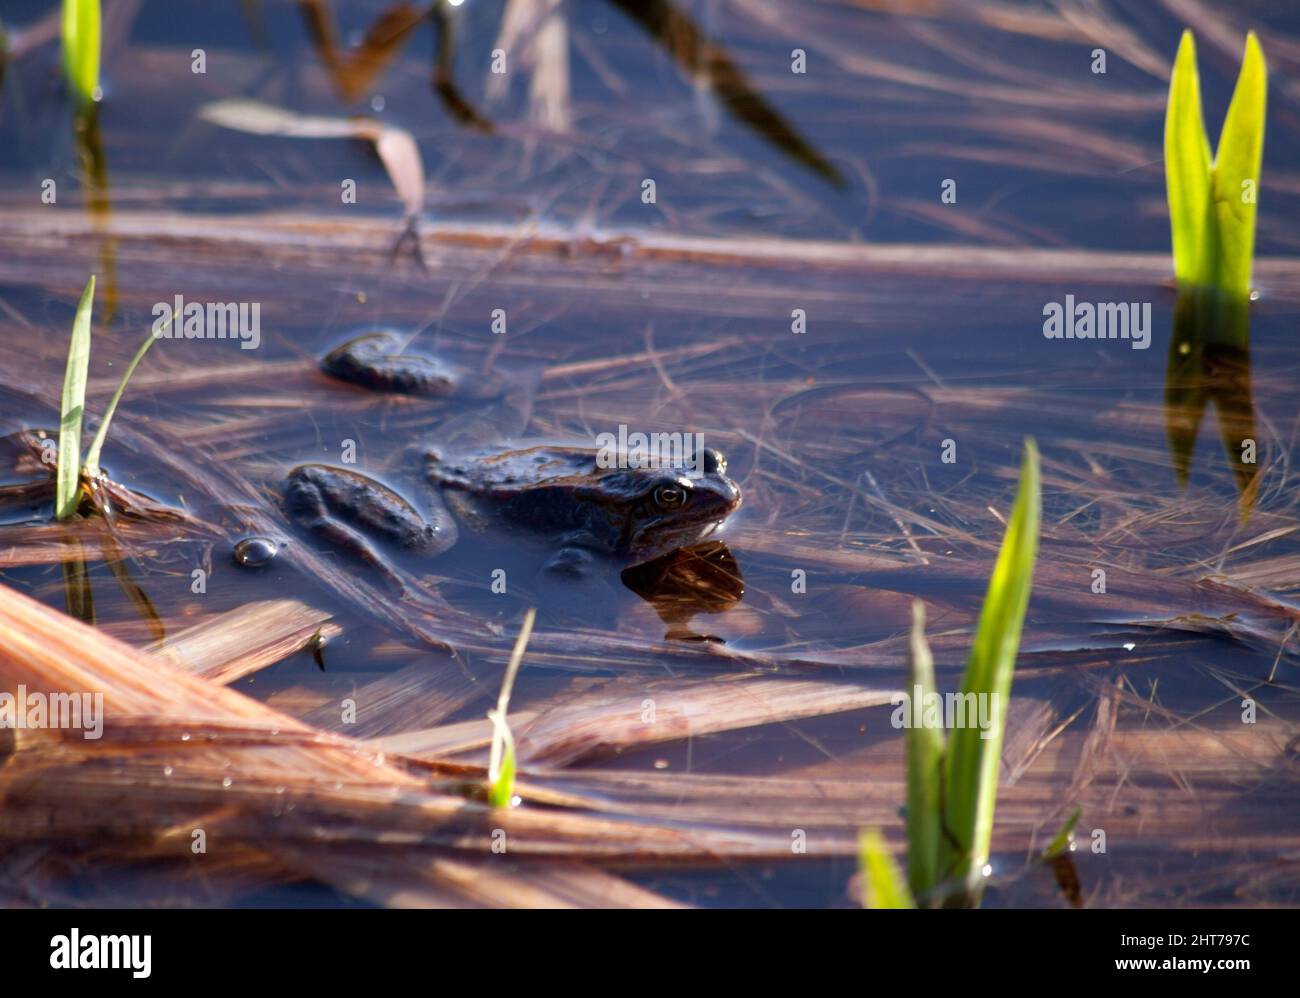 Common frog - Rana temporaria amidst reeds Stock Photo